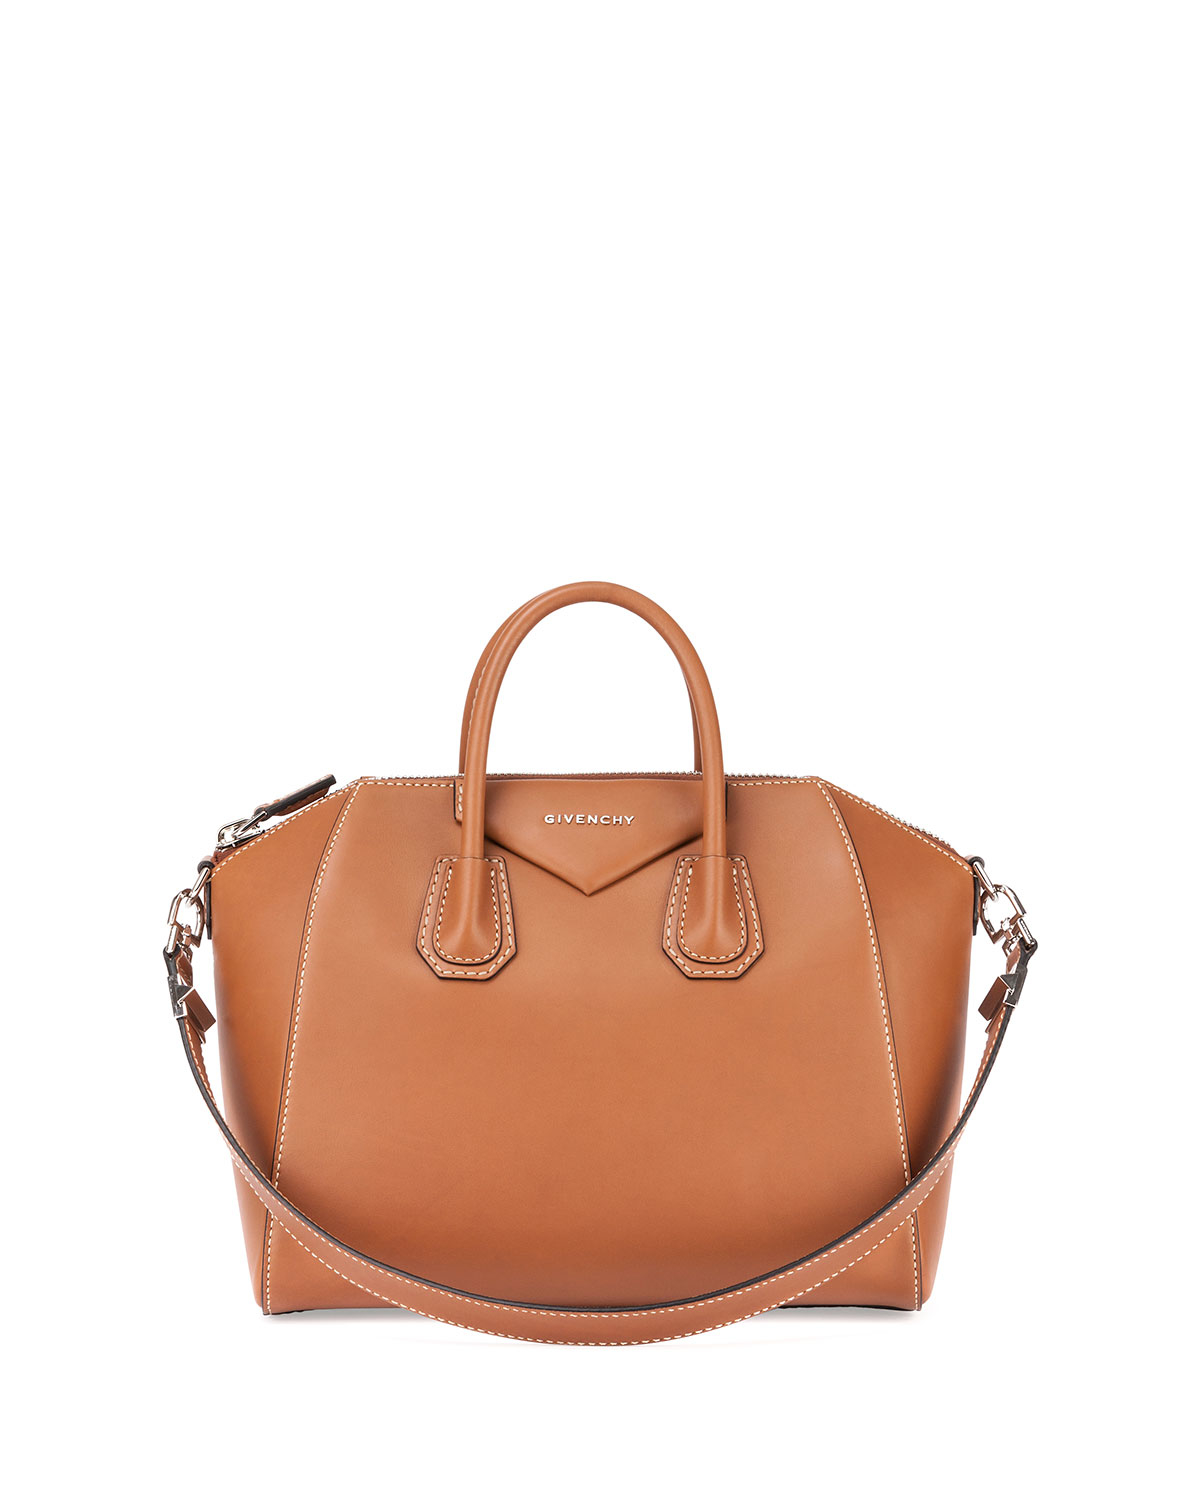 Givenchy Antigona Medium Smooth Leather Satchel Bag in Brown | Lyst